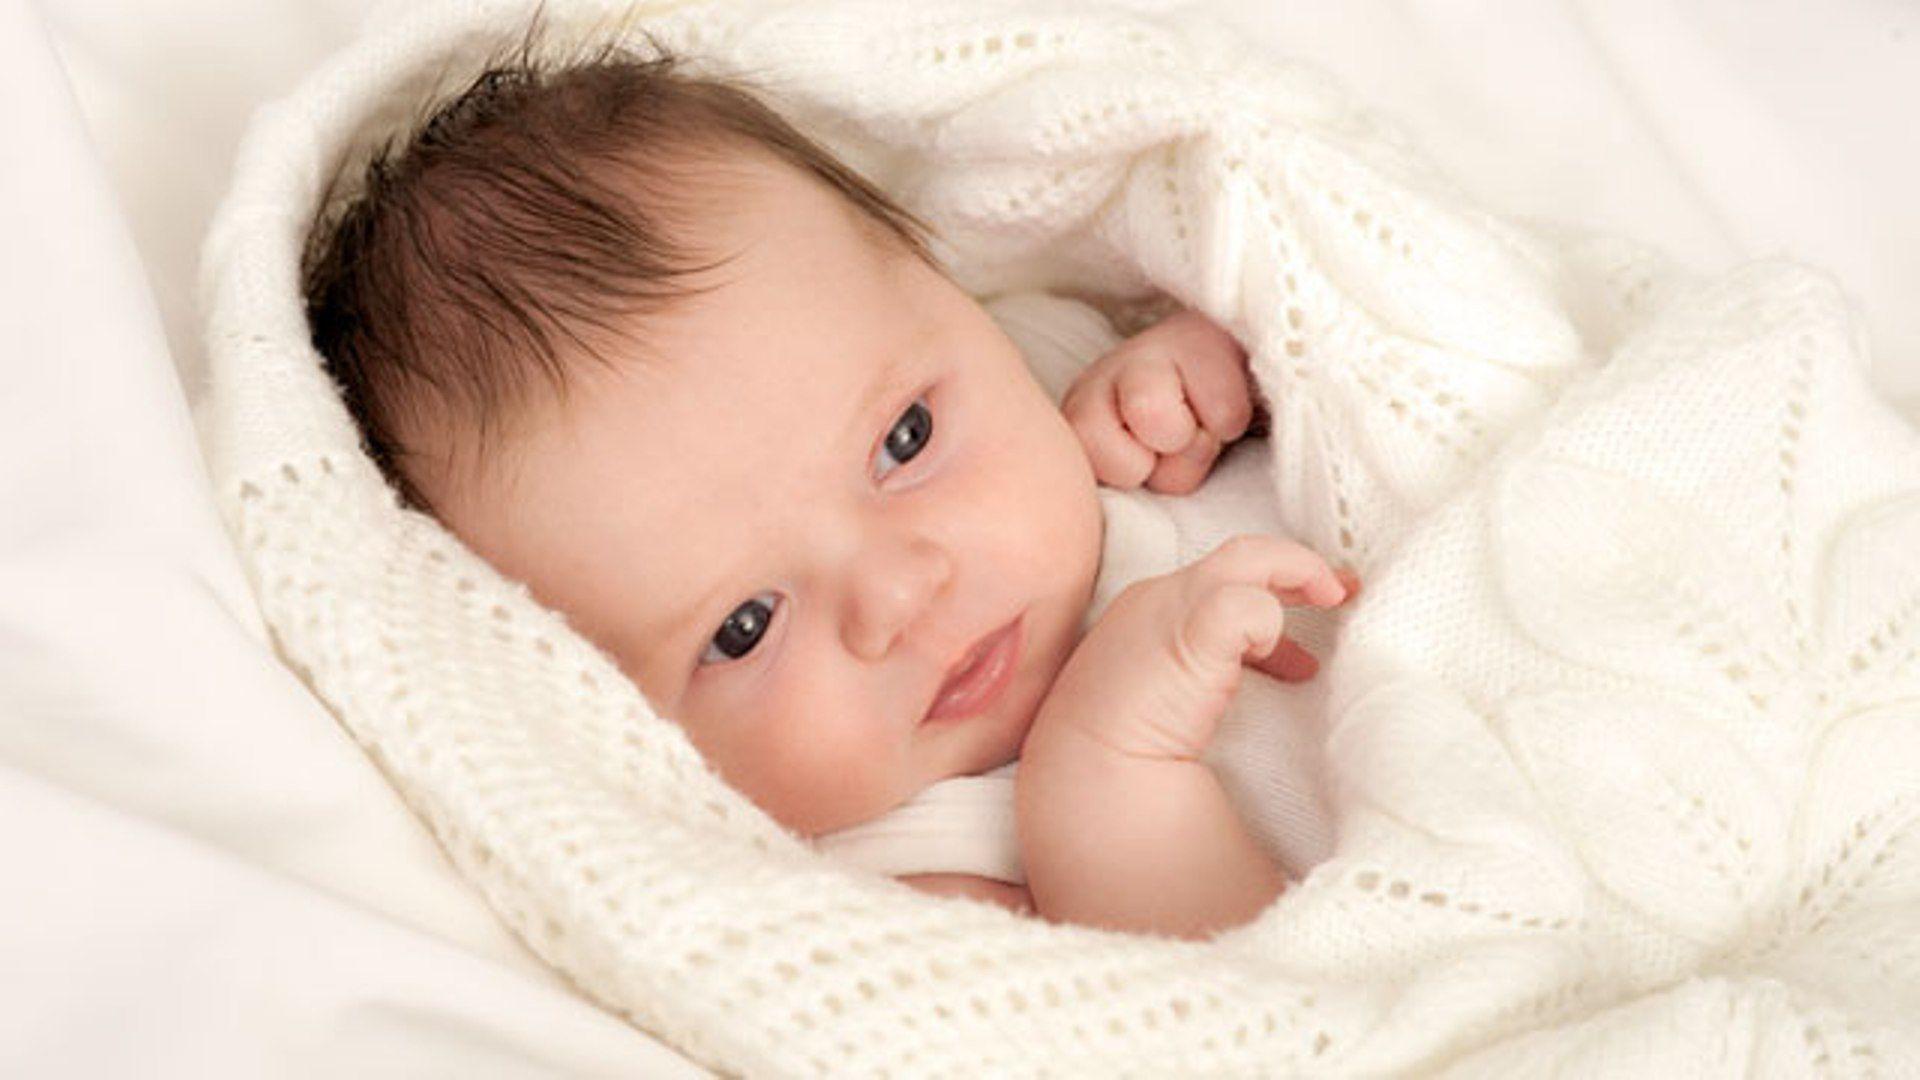 Cute Baby Boy Image Download